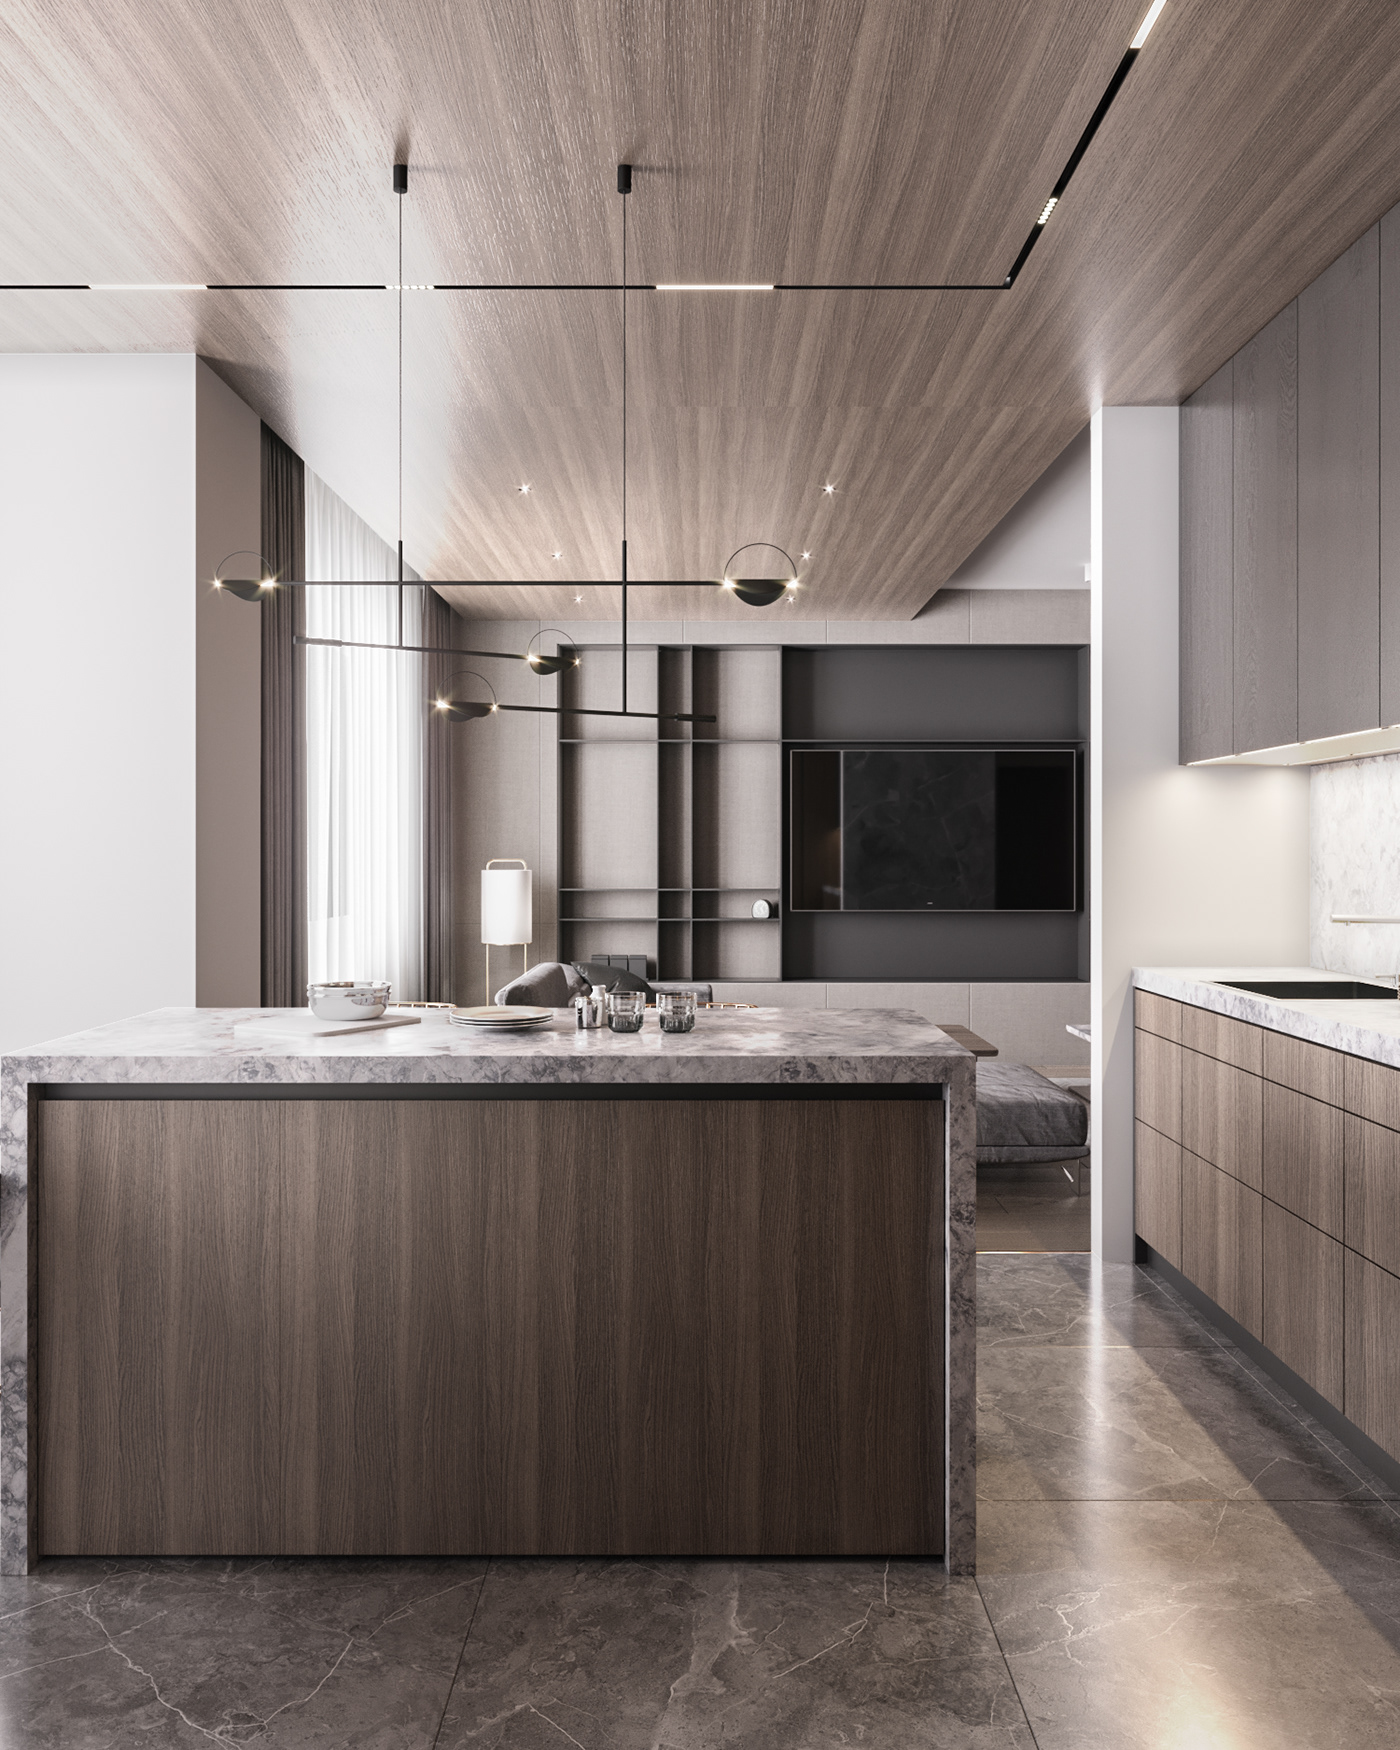 design Moscow 3ds max Interior kitchen living room bedroom bathroom concept graphics